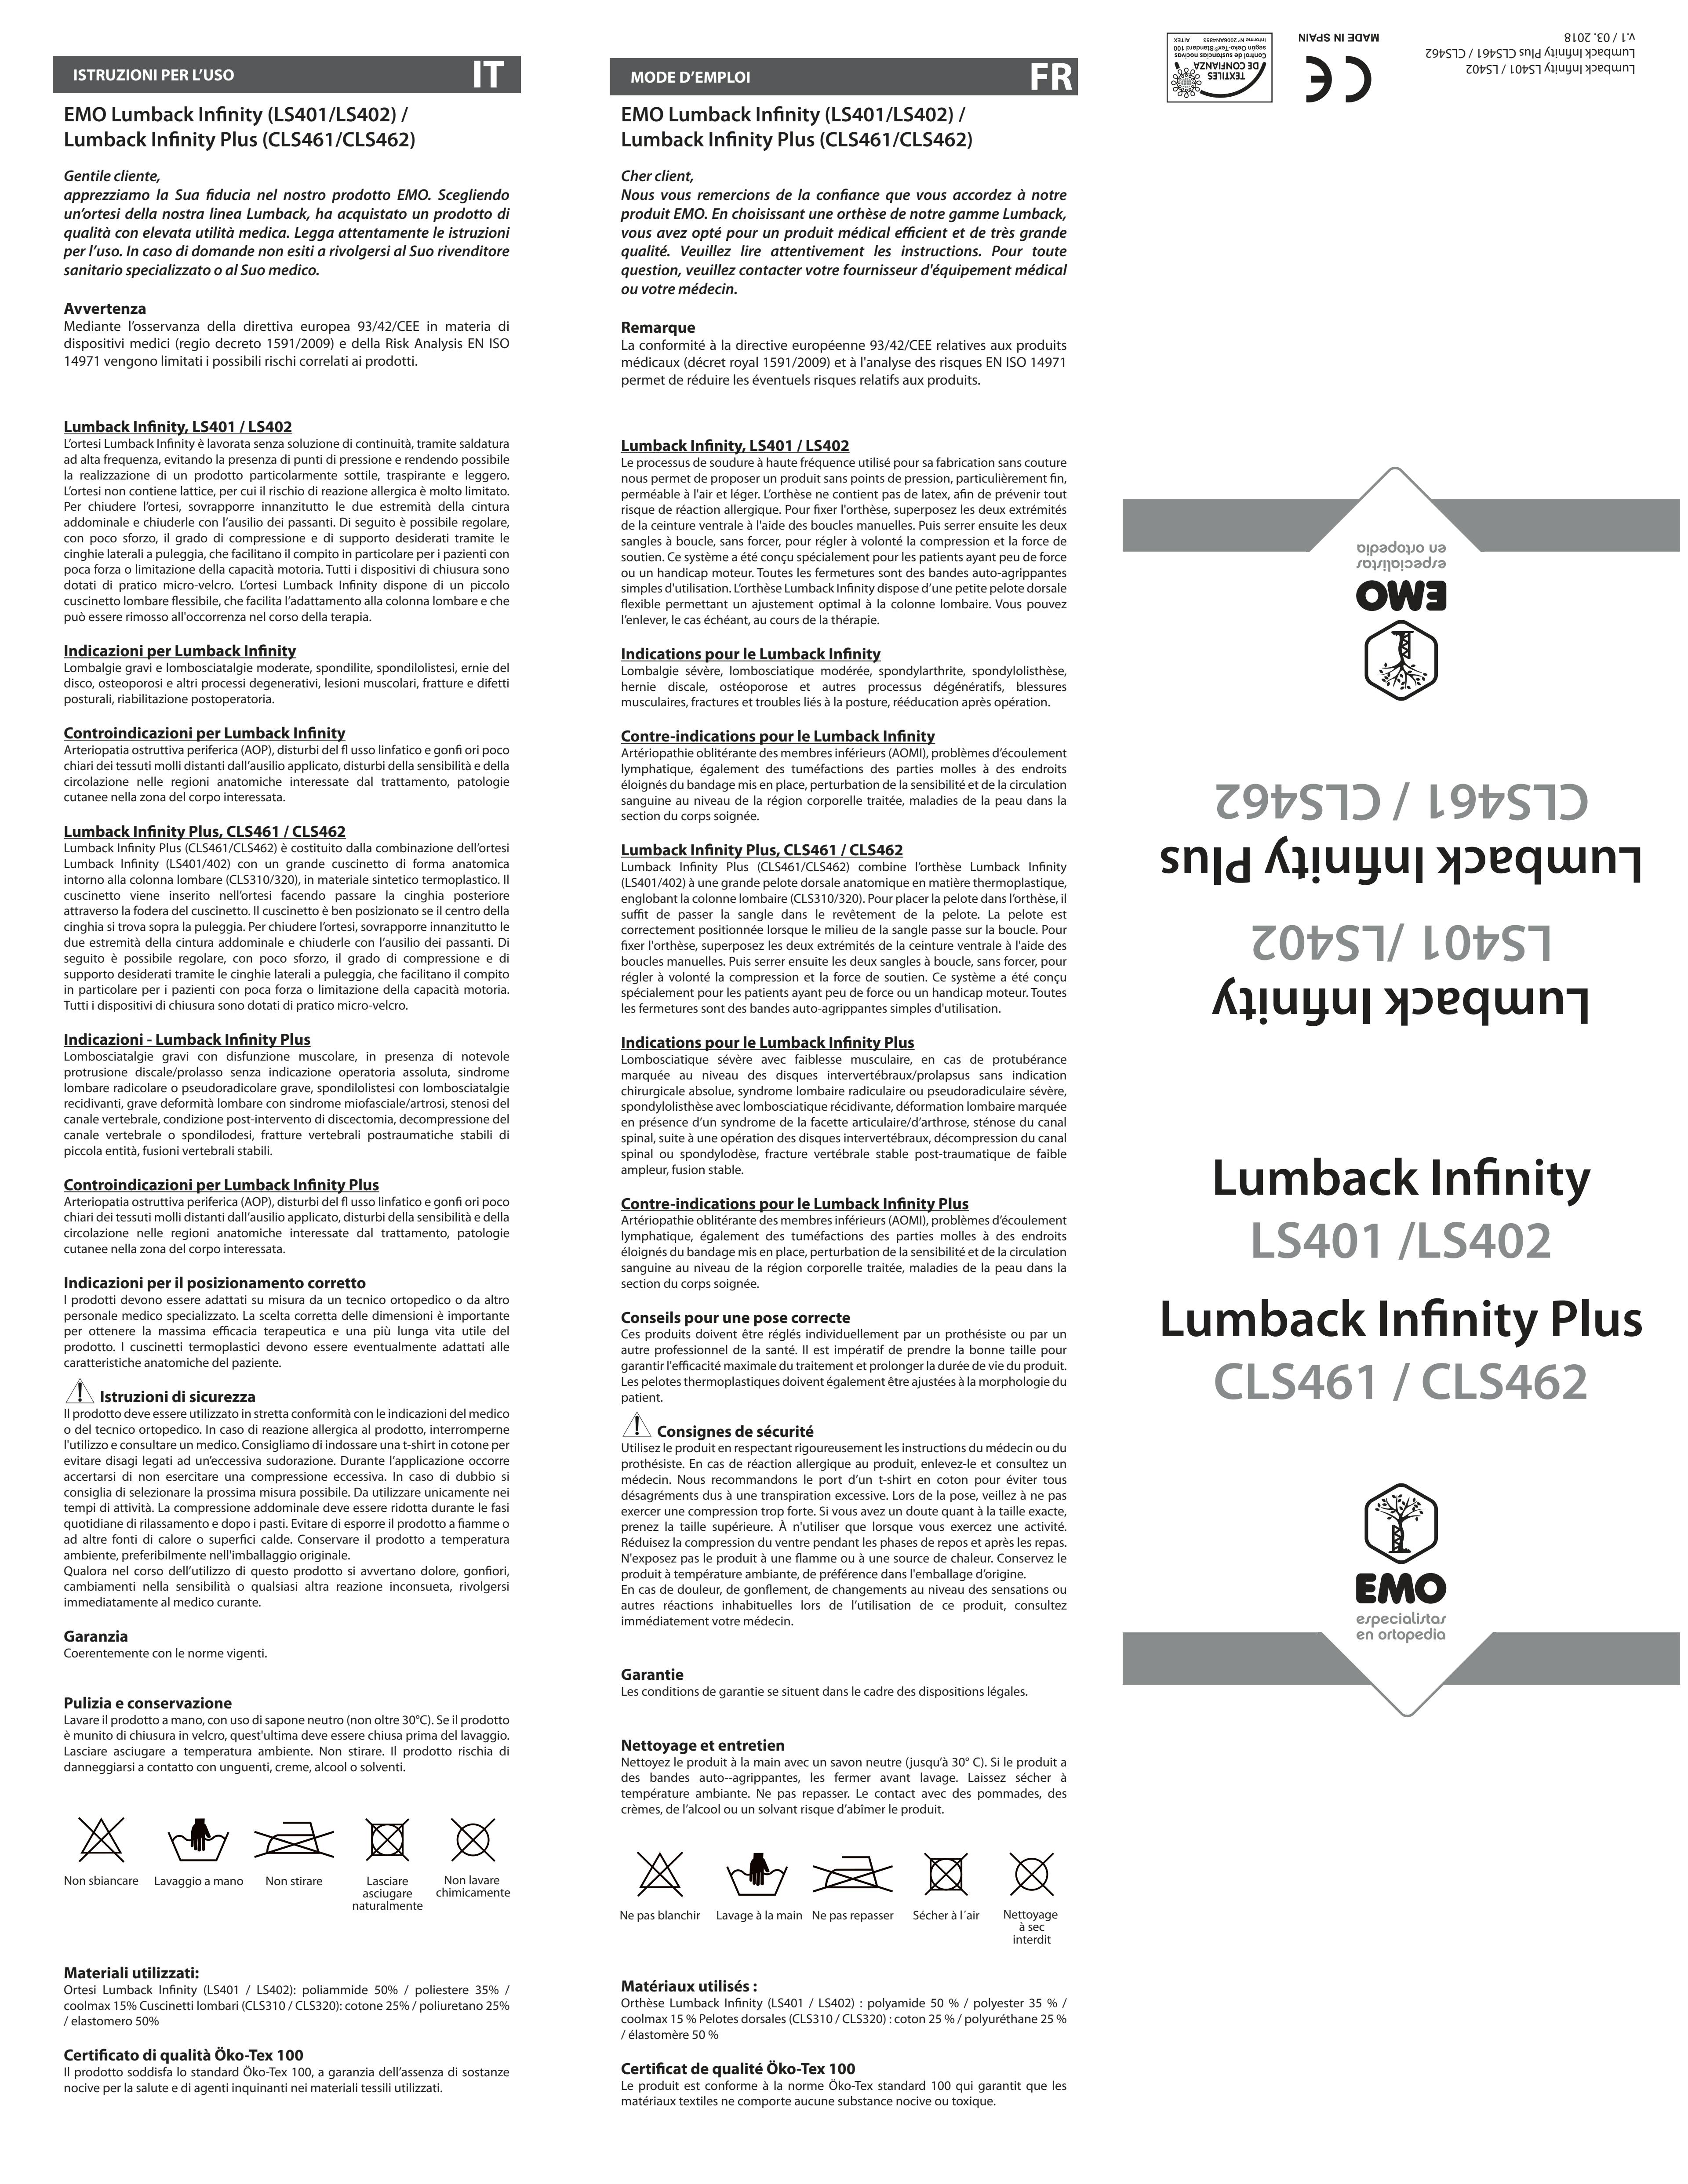 Gebrauchsanleitung_EMO_Lumback-Infinity-&-Infinity-Plus_LS401_LS402_CLS461_CLS462-v.1-03.2018.pdf